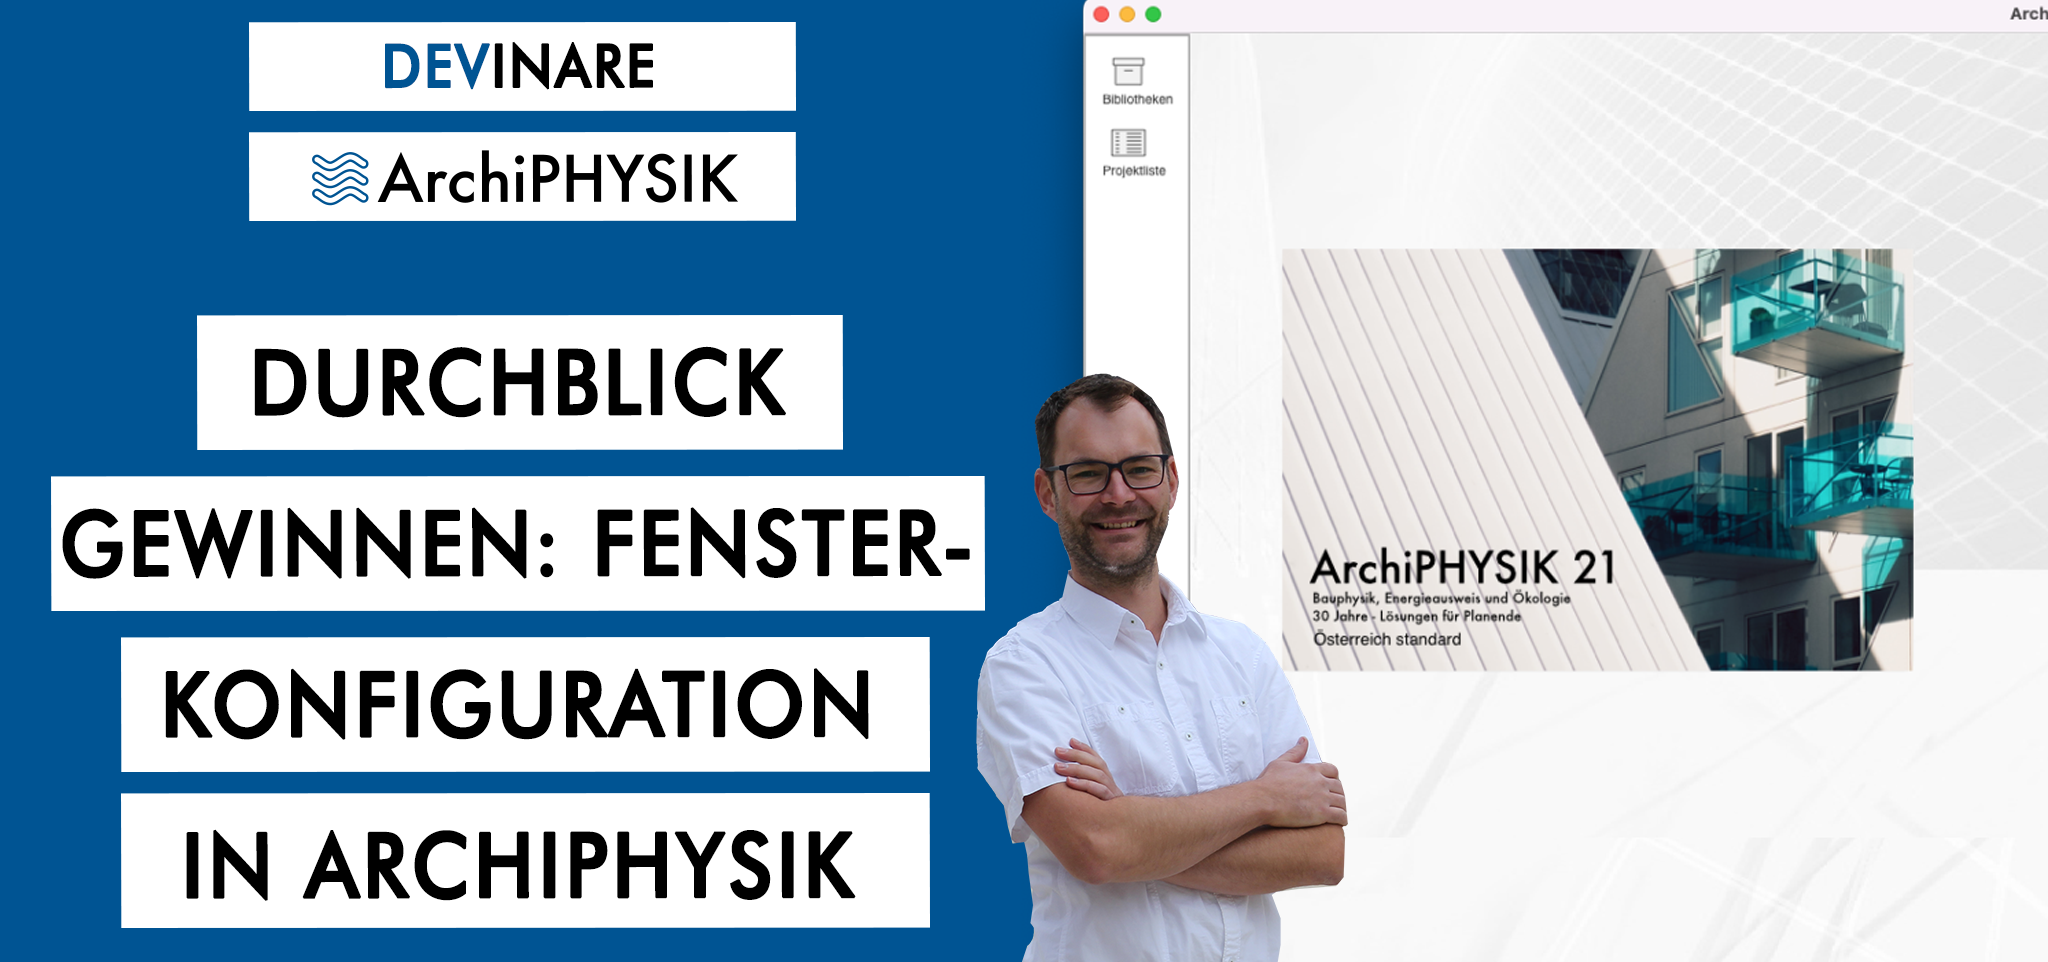 Devinar: Durchblick gewinnen – Fensterkonfiguration in ArchiPHYSIK